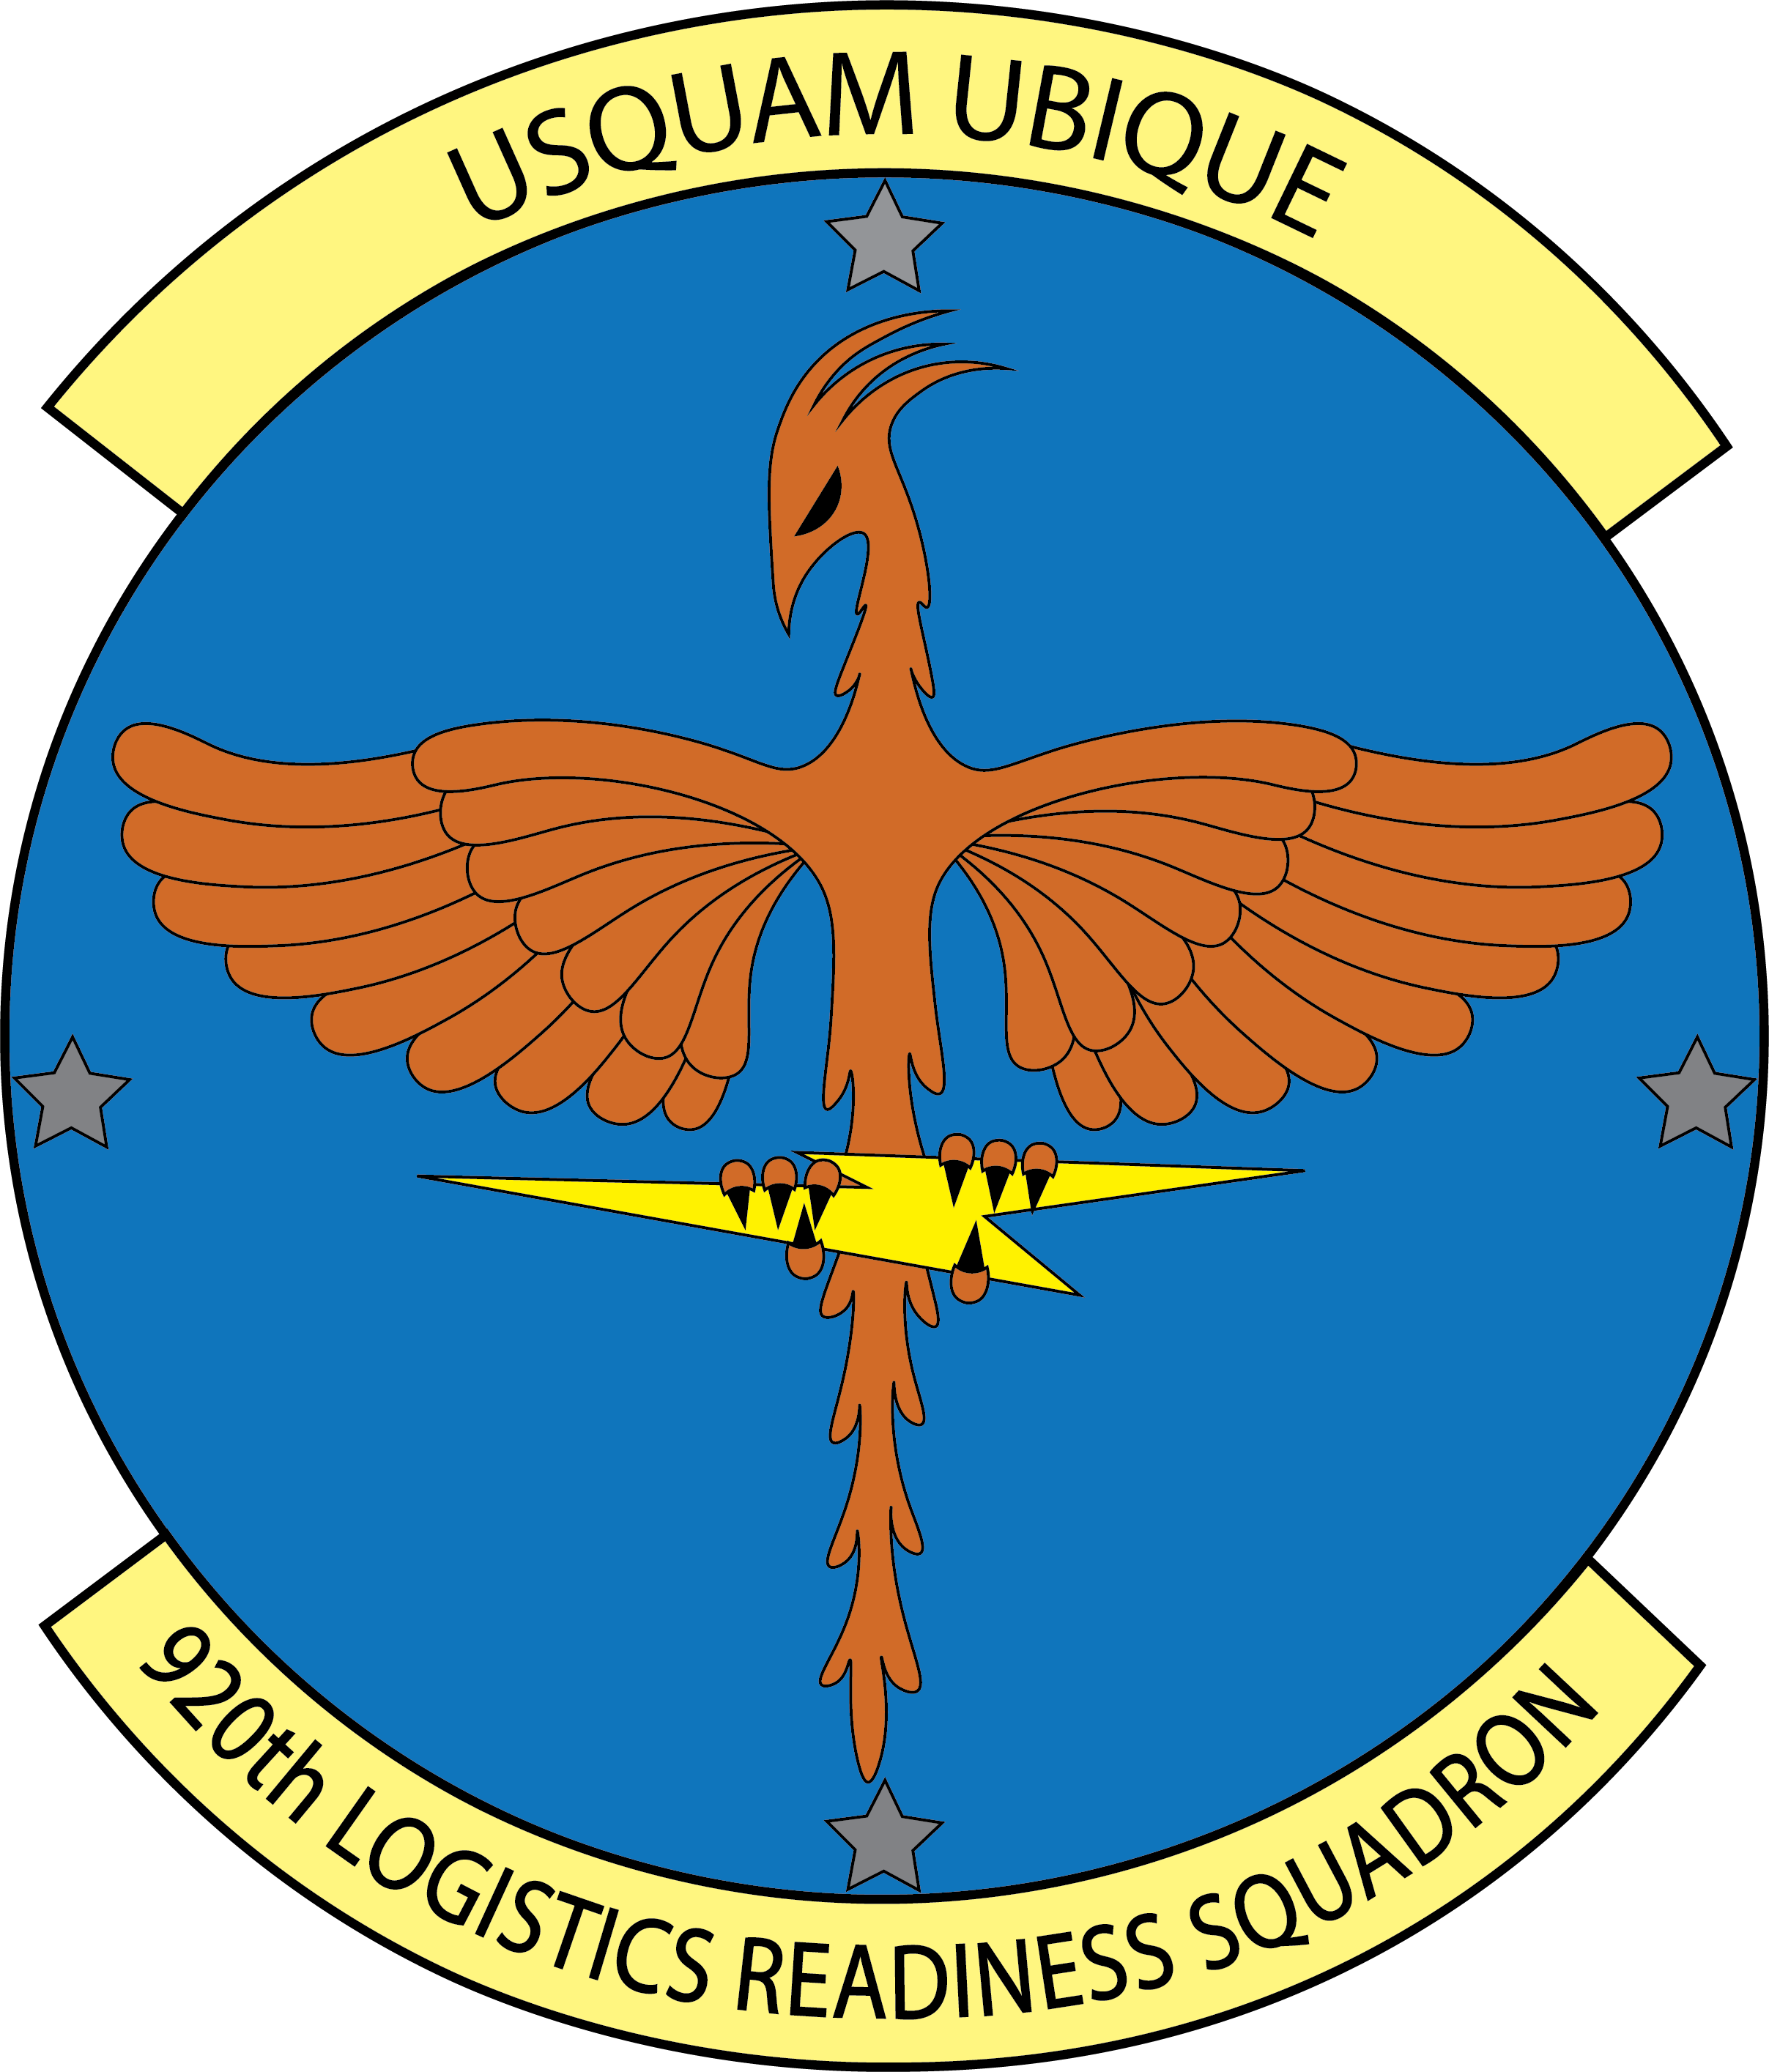 920th Logistics Readiness Squadron patch